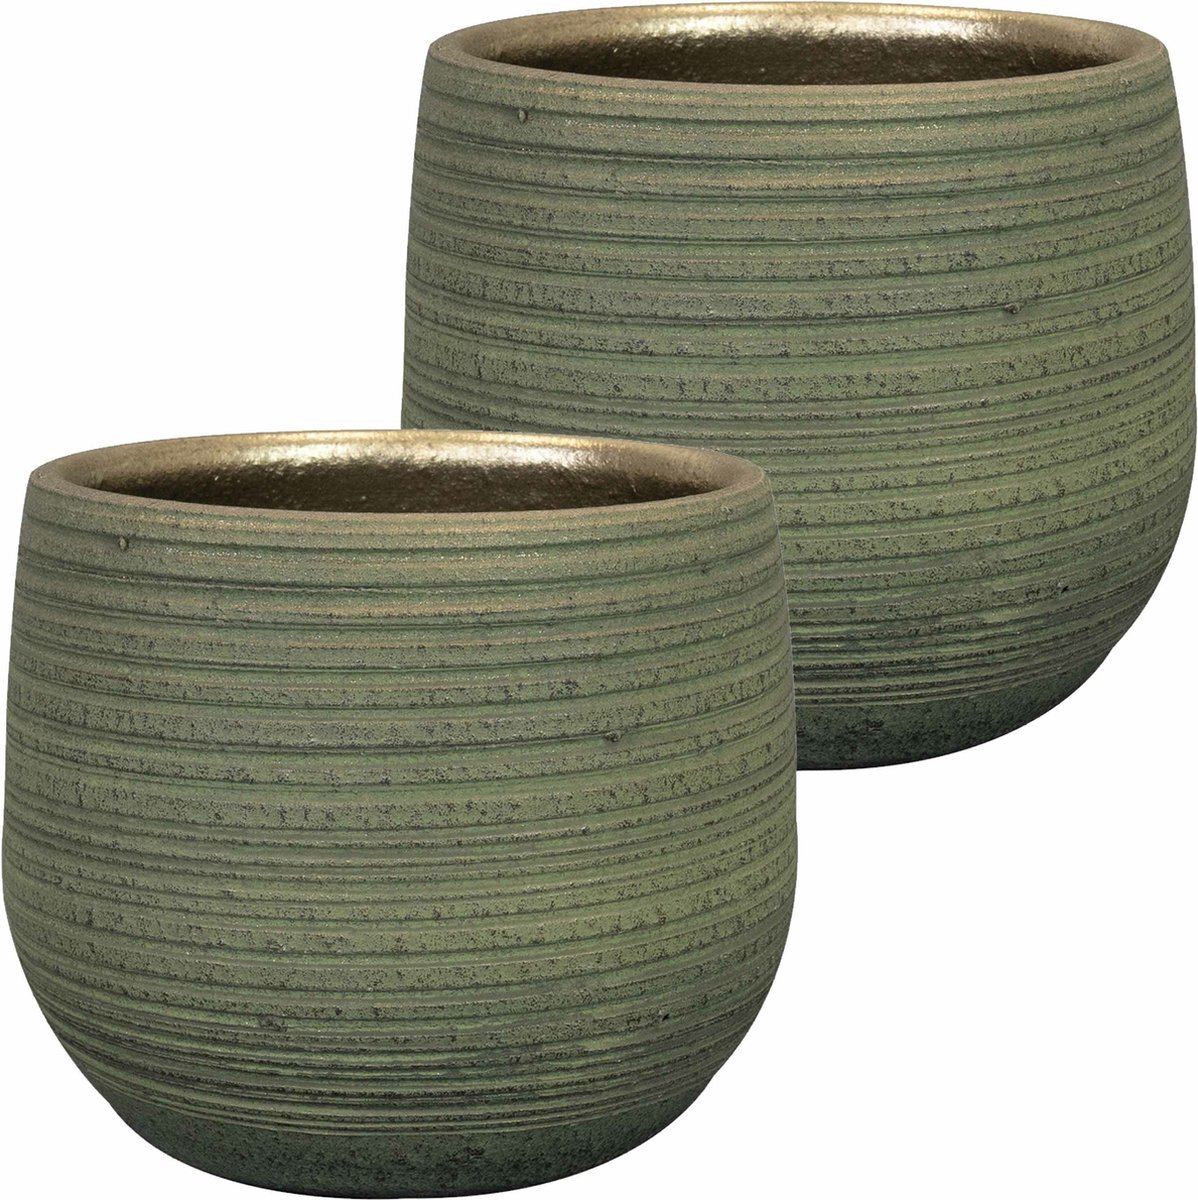 Steege, TER Steege Plantenpot/bloempot - 2x - keramiek - donkergroen stripes relief - D18/H16 cm